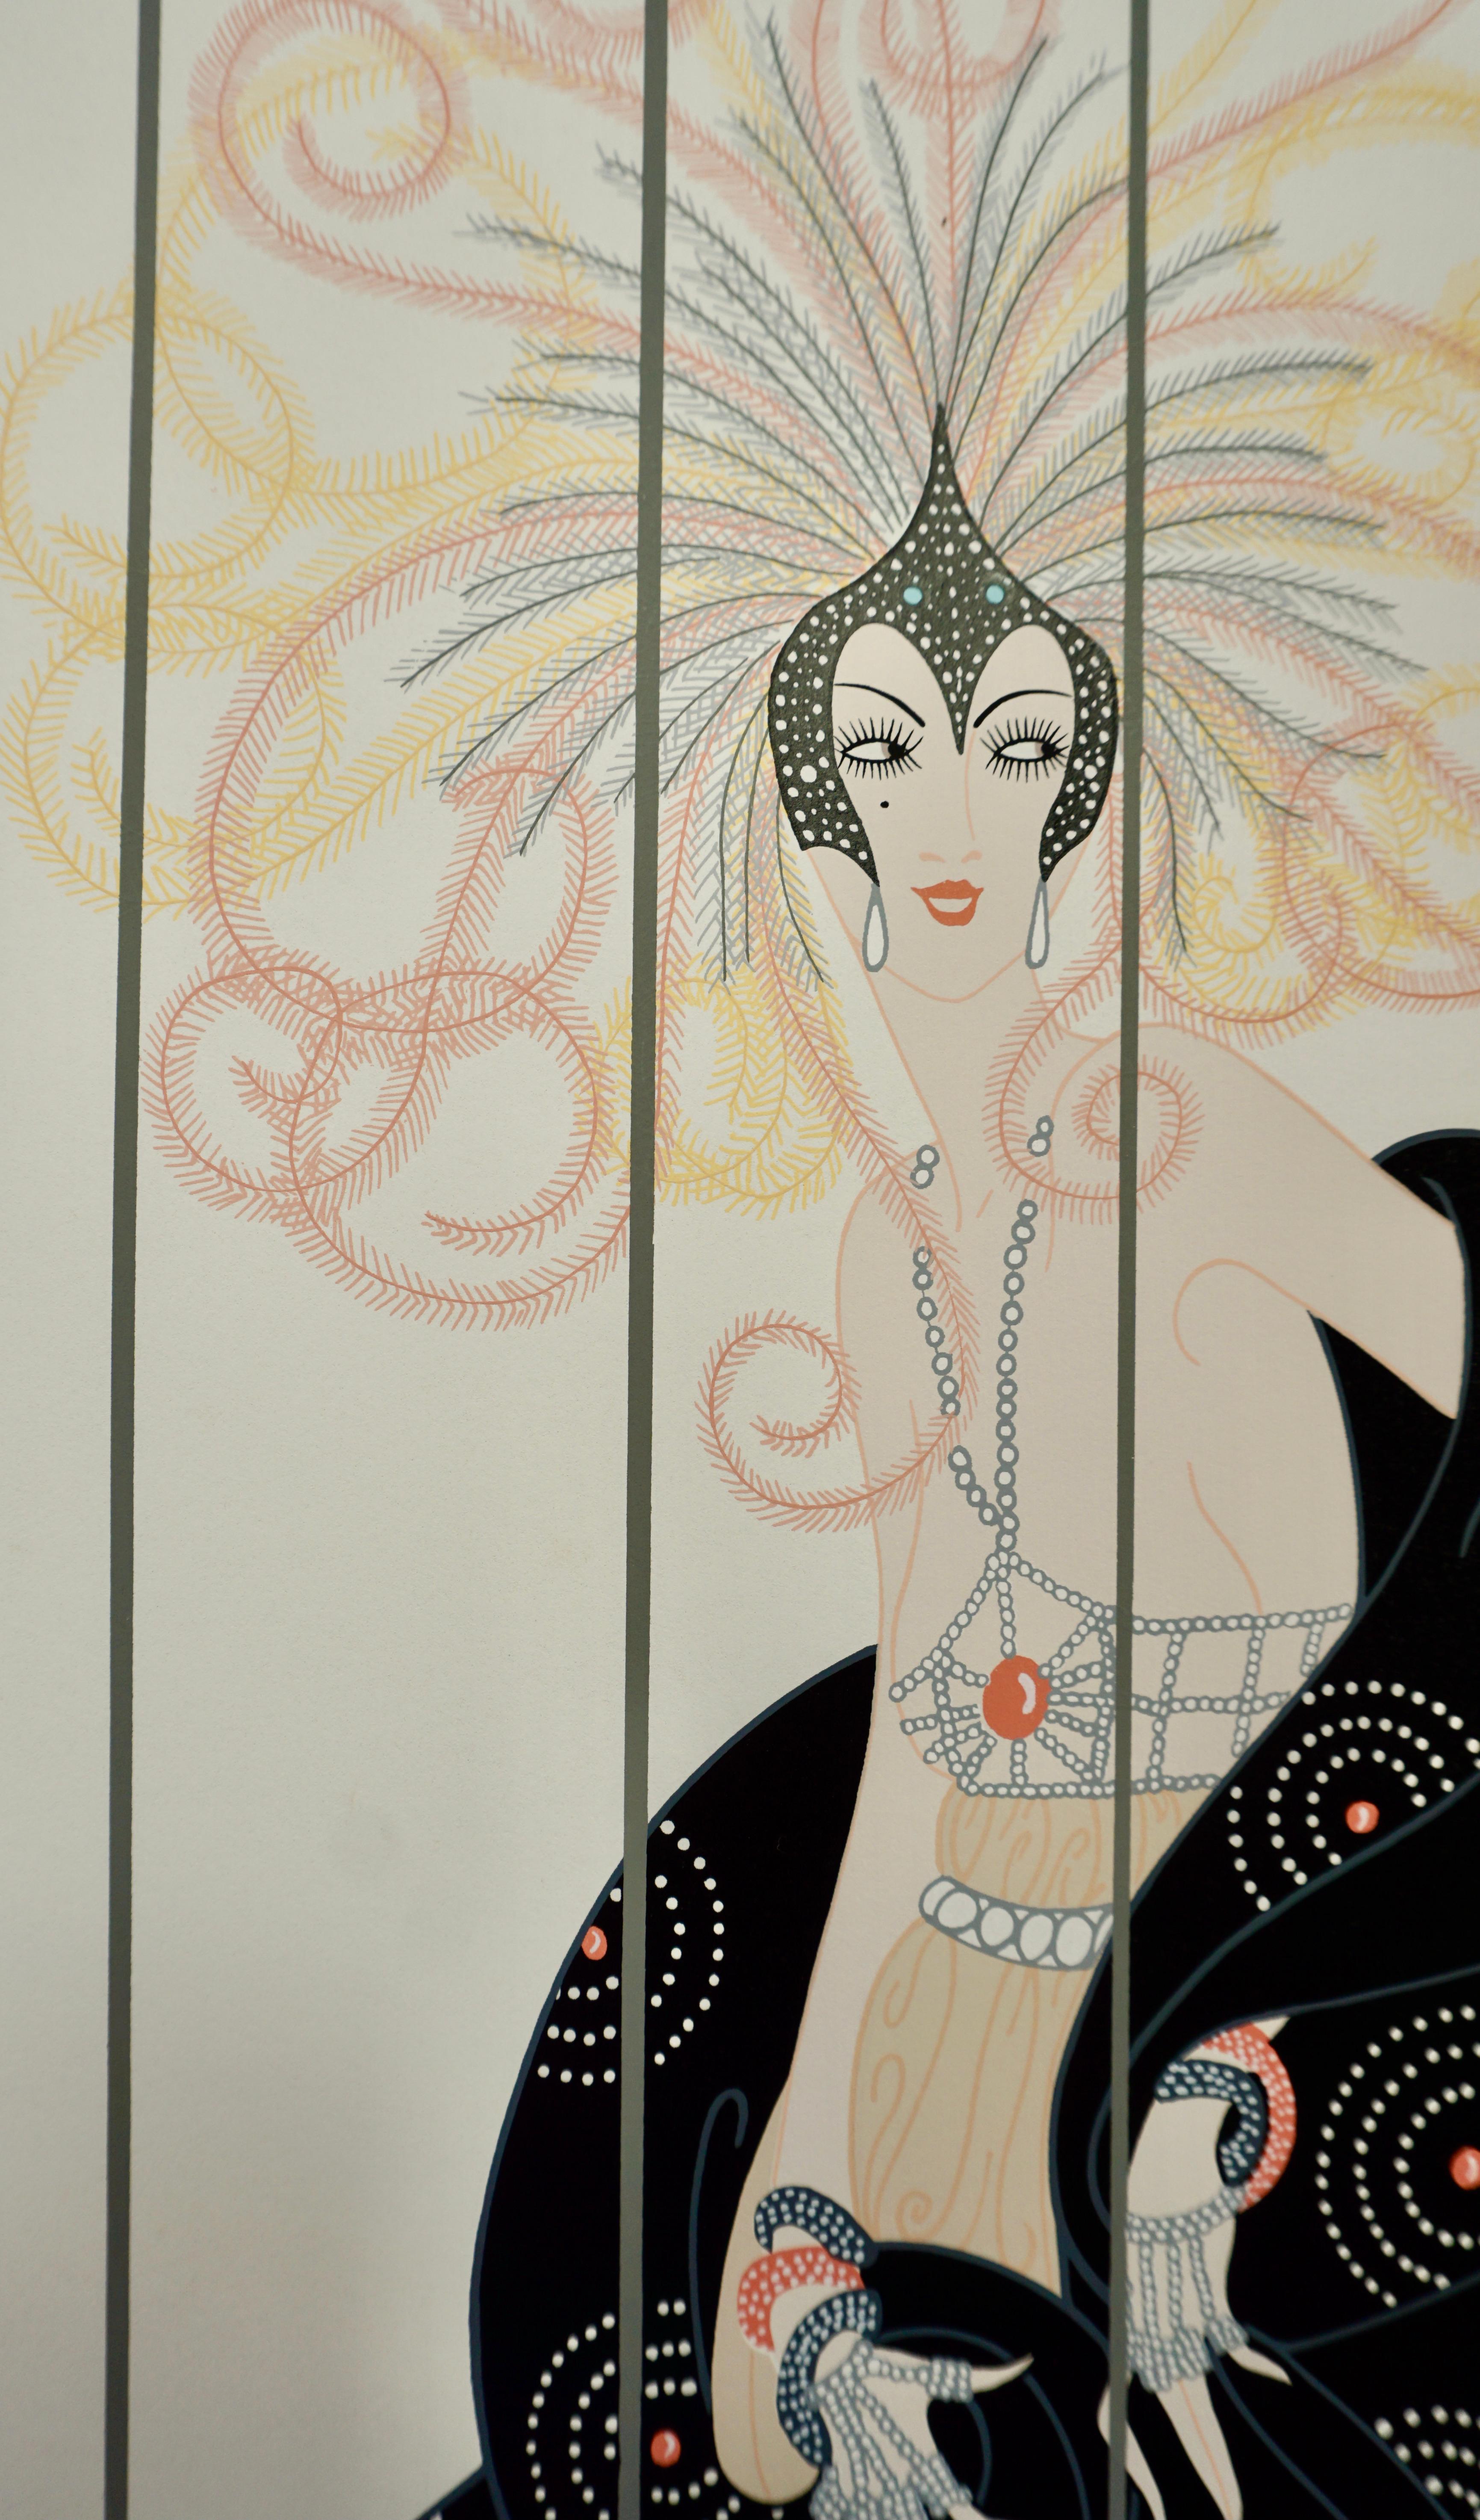 The Bird Cage - Art Deco Print by Erté